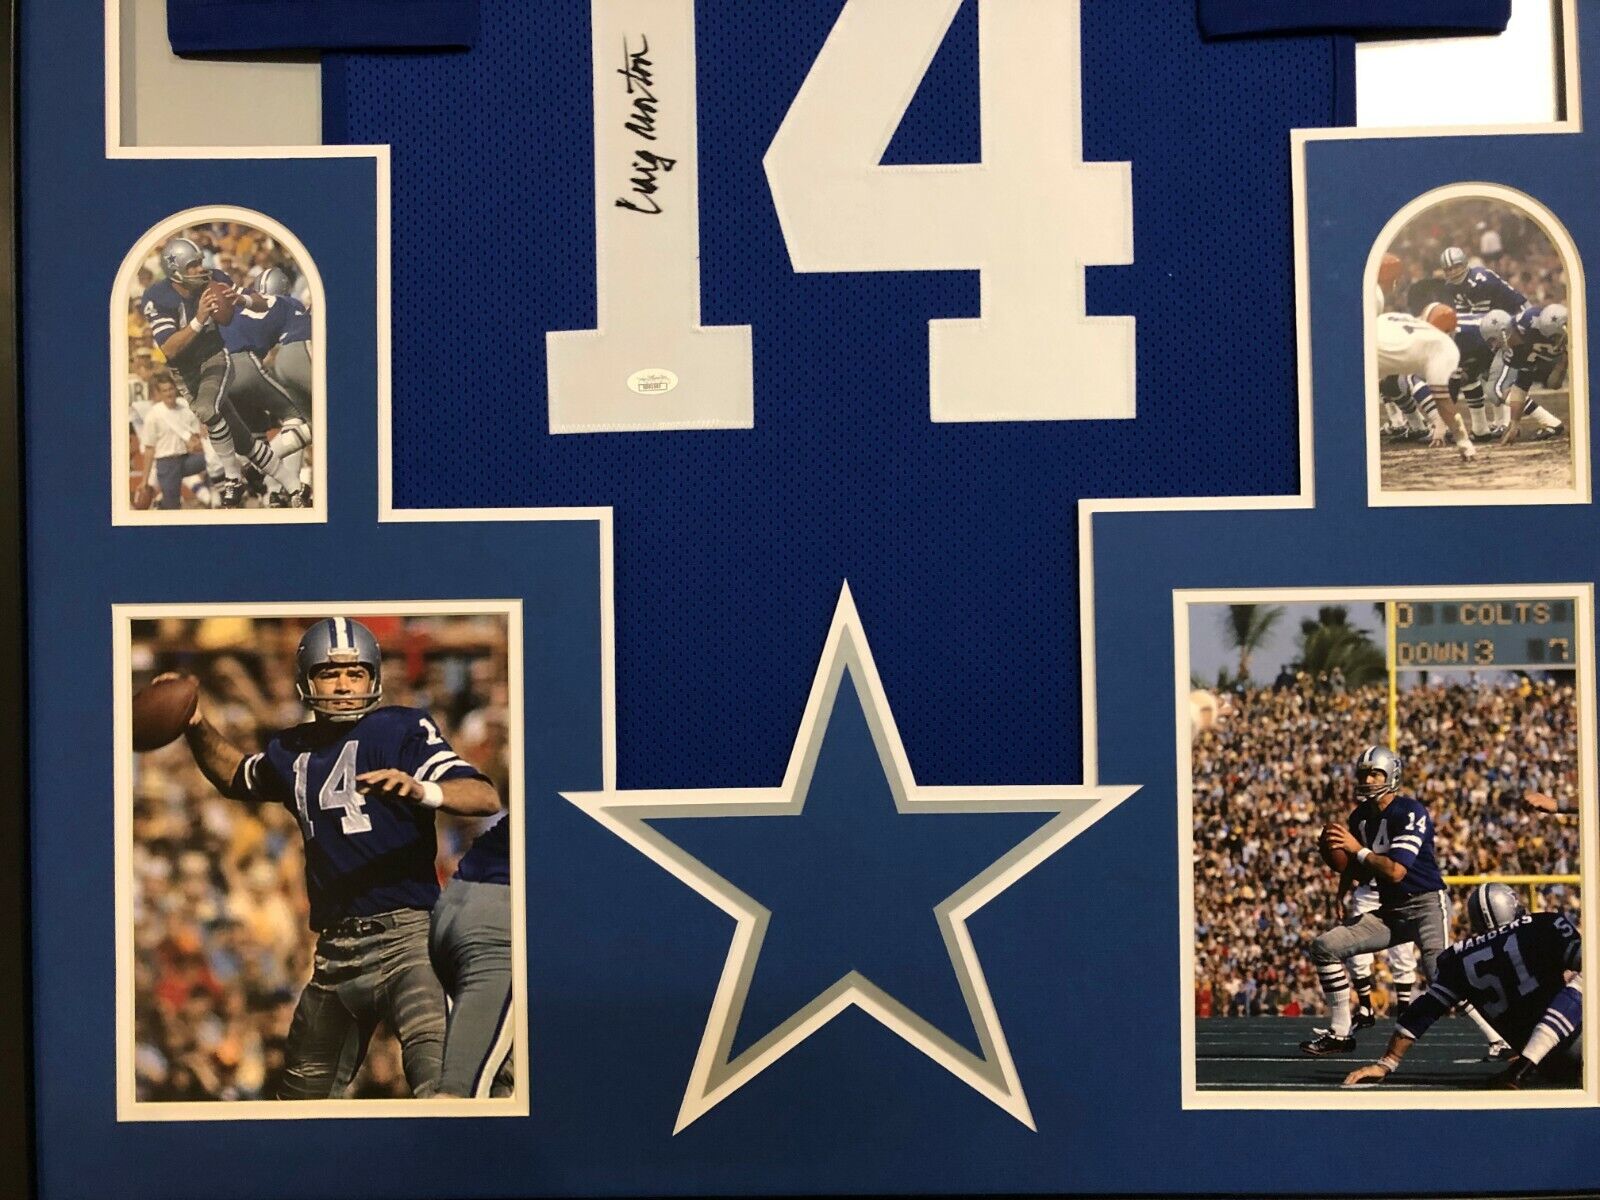 MVP Authentics Framed Dallas Cowboys Craig Morton Autographed Signed Jersey Jsa Coa 449.10 sports jersey framing , jersey framing